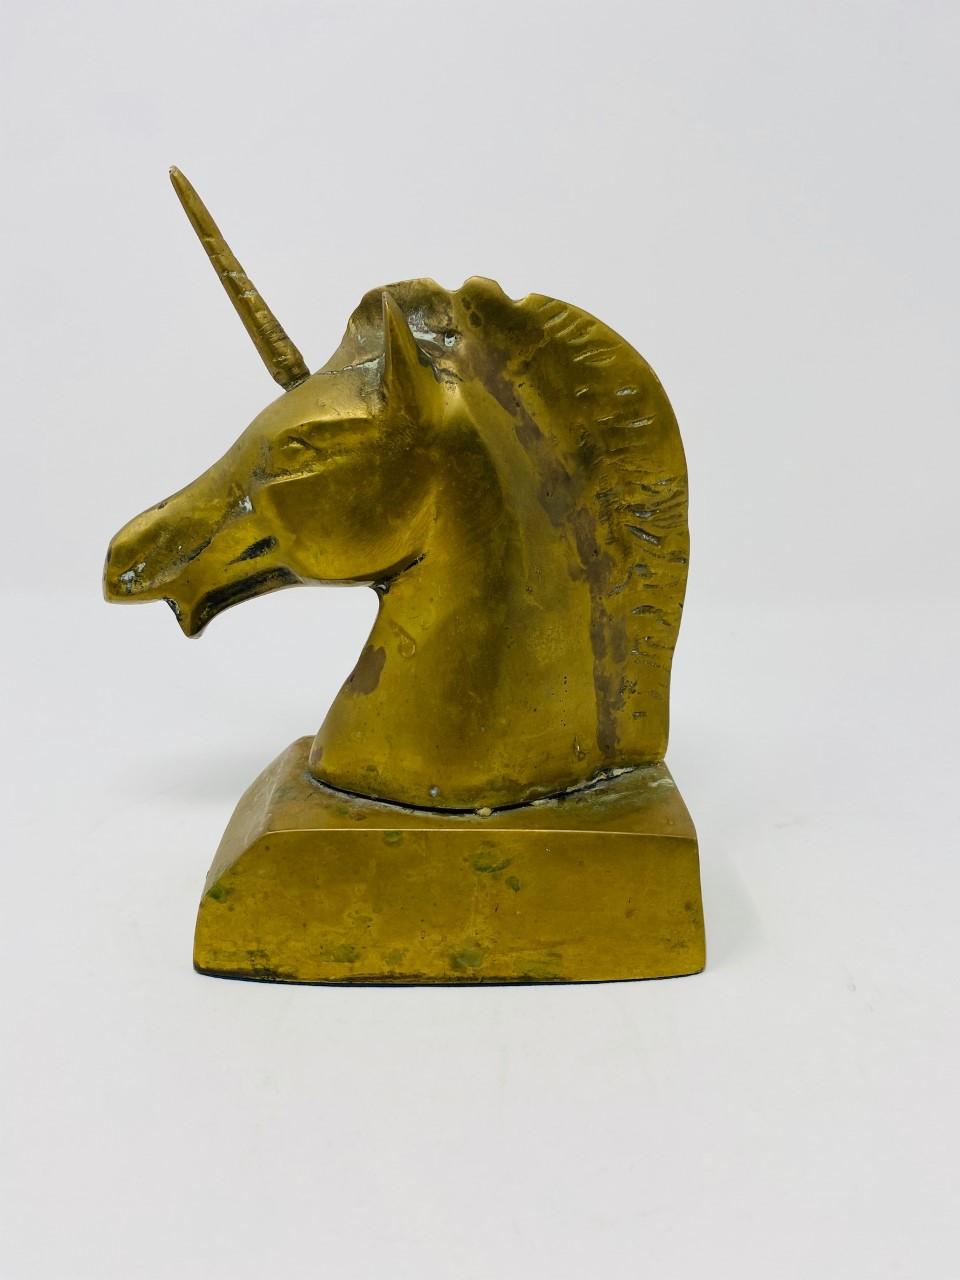 Vintage Rare Art Deco Brass Unicorn Sculpture Bookends 1